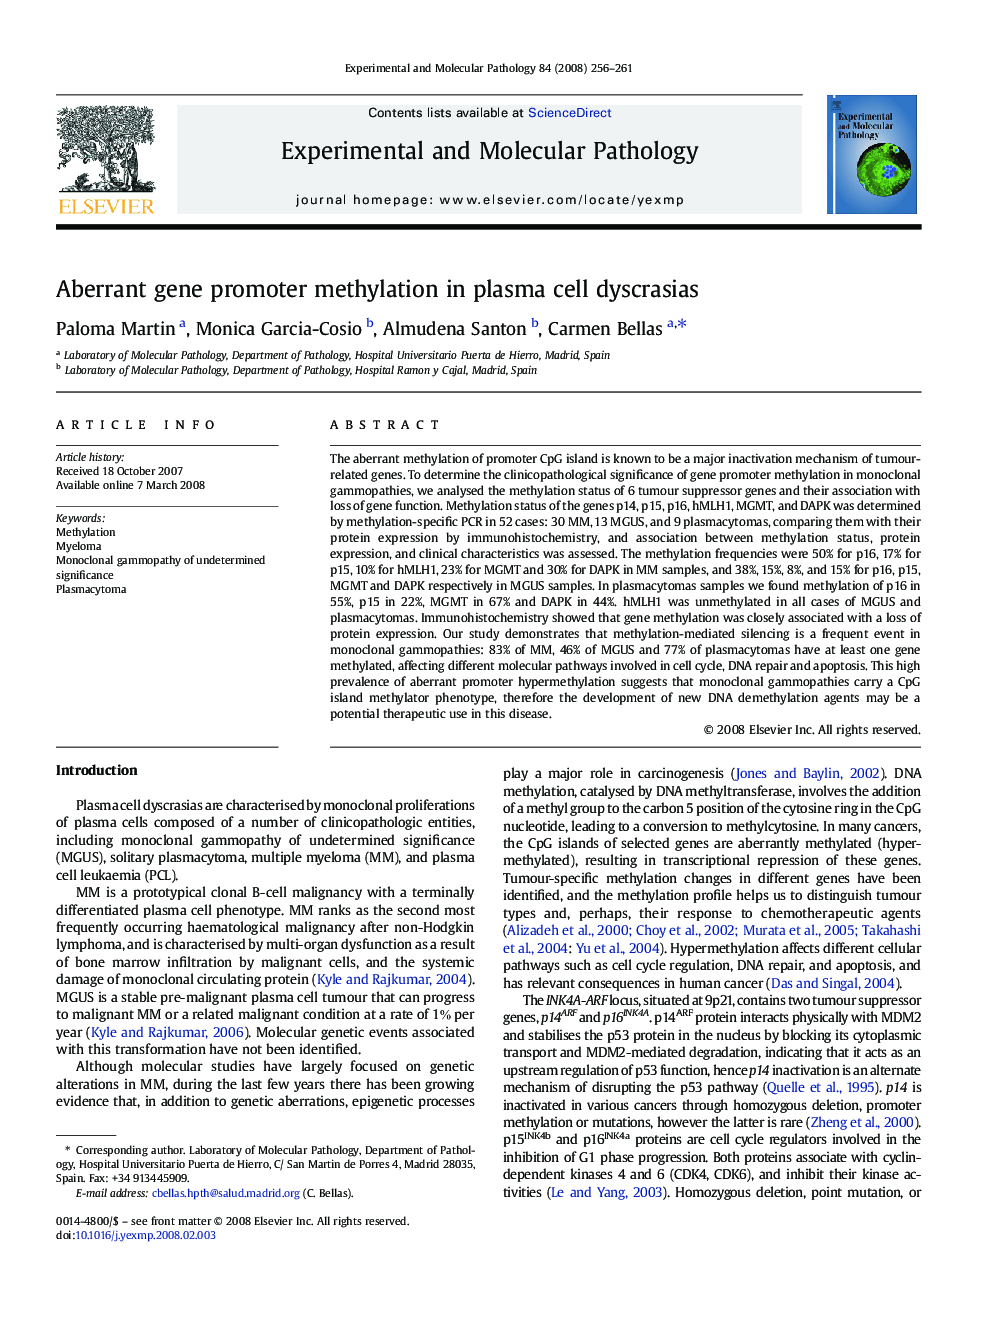 Aberrant gene promoter methylation in plasma cell dyscrasias